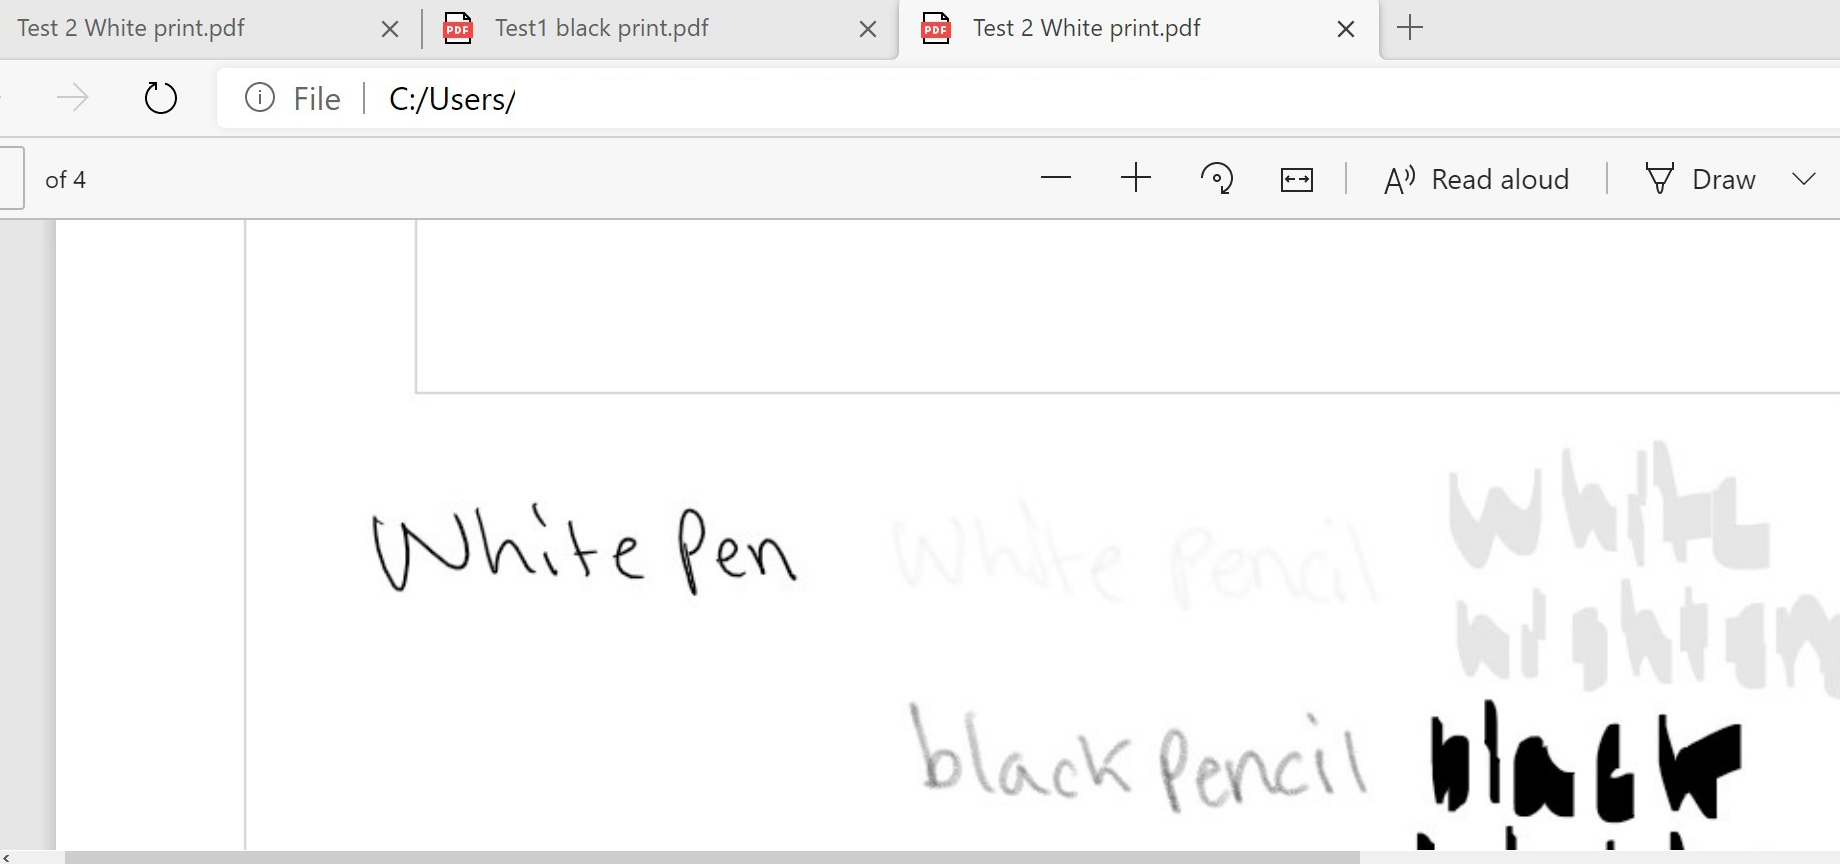 black pencil black png - Google Search